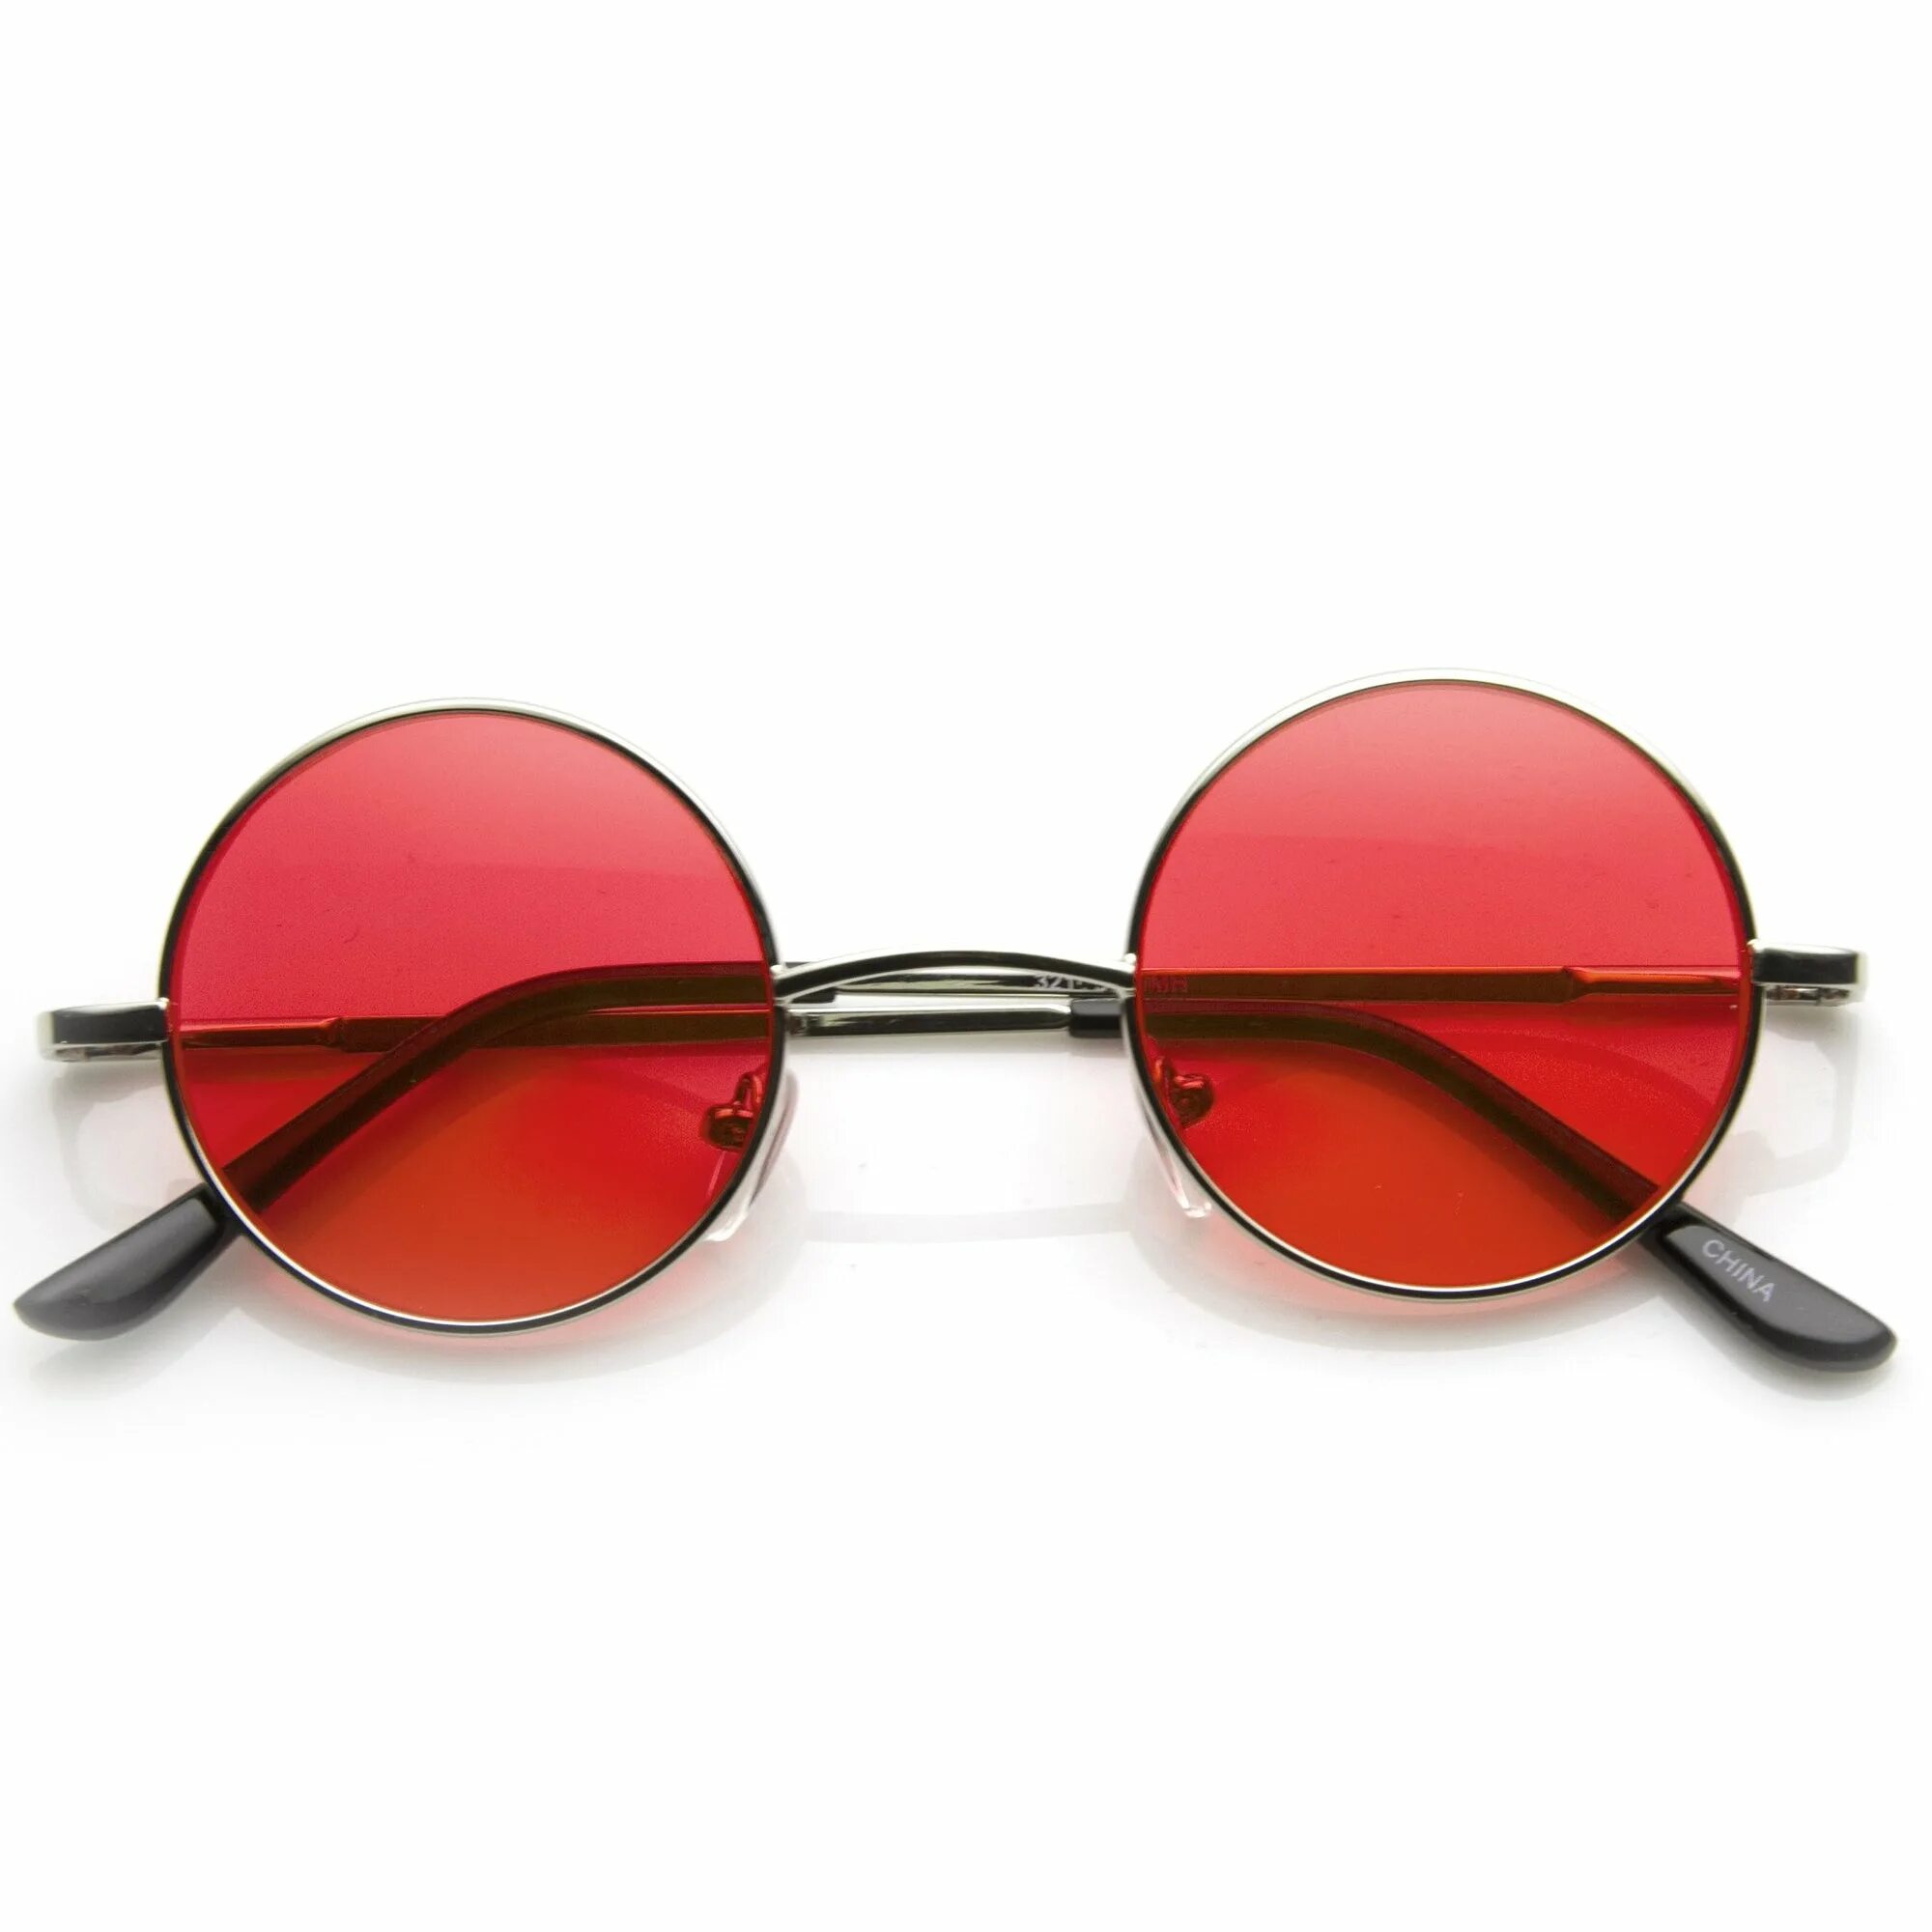 Очки Джона Леннона, красные. Очки Джона Леннона солнцезащитные. Джон Леннон солнечные очки. Red Sun очки солнцезащитные r6091.